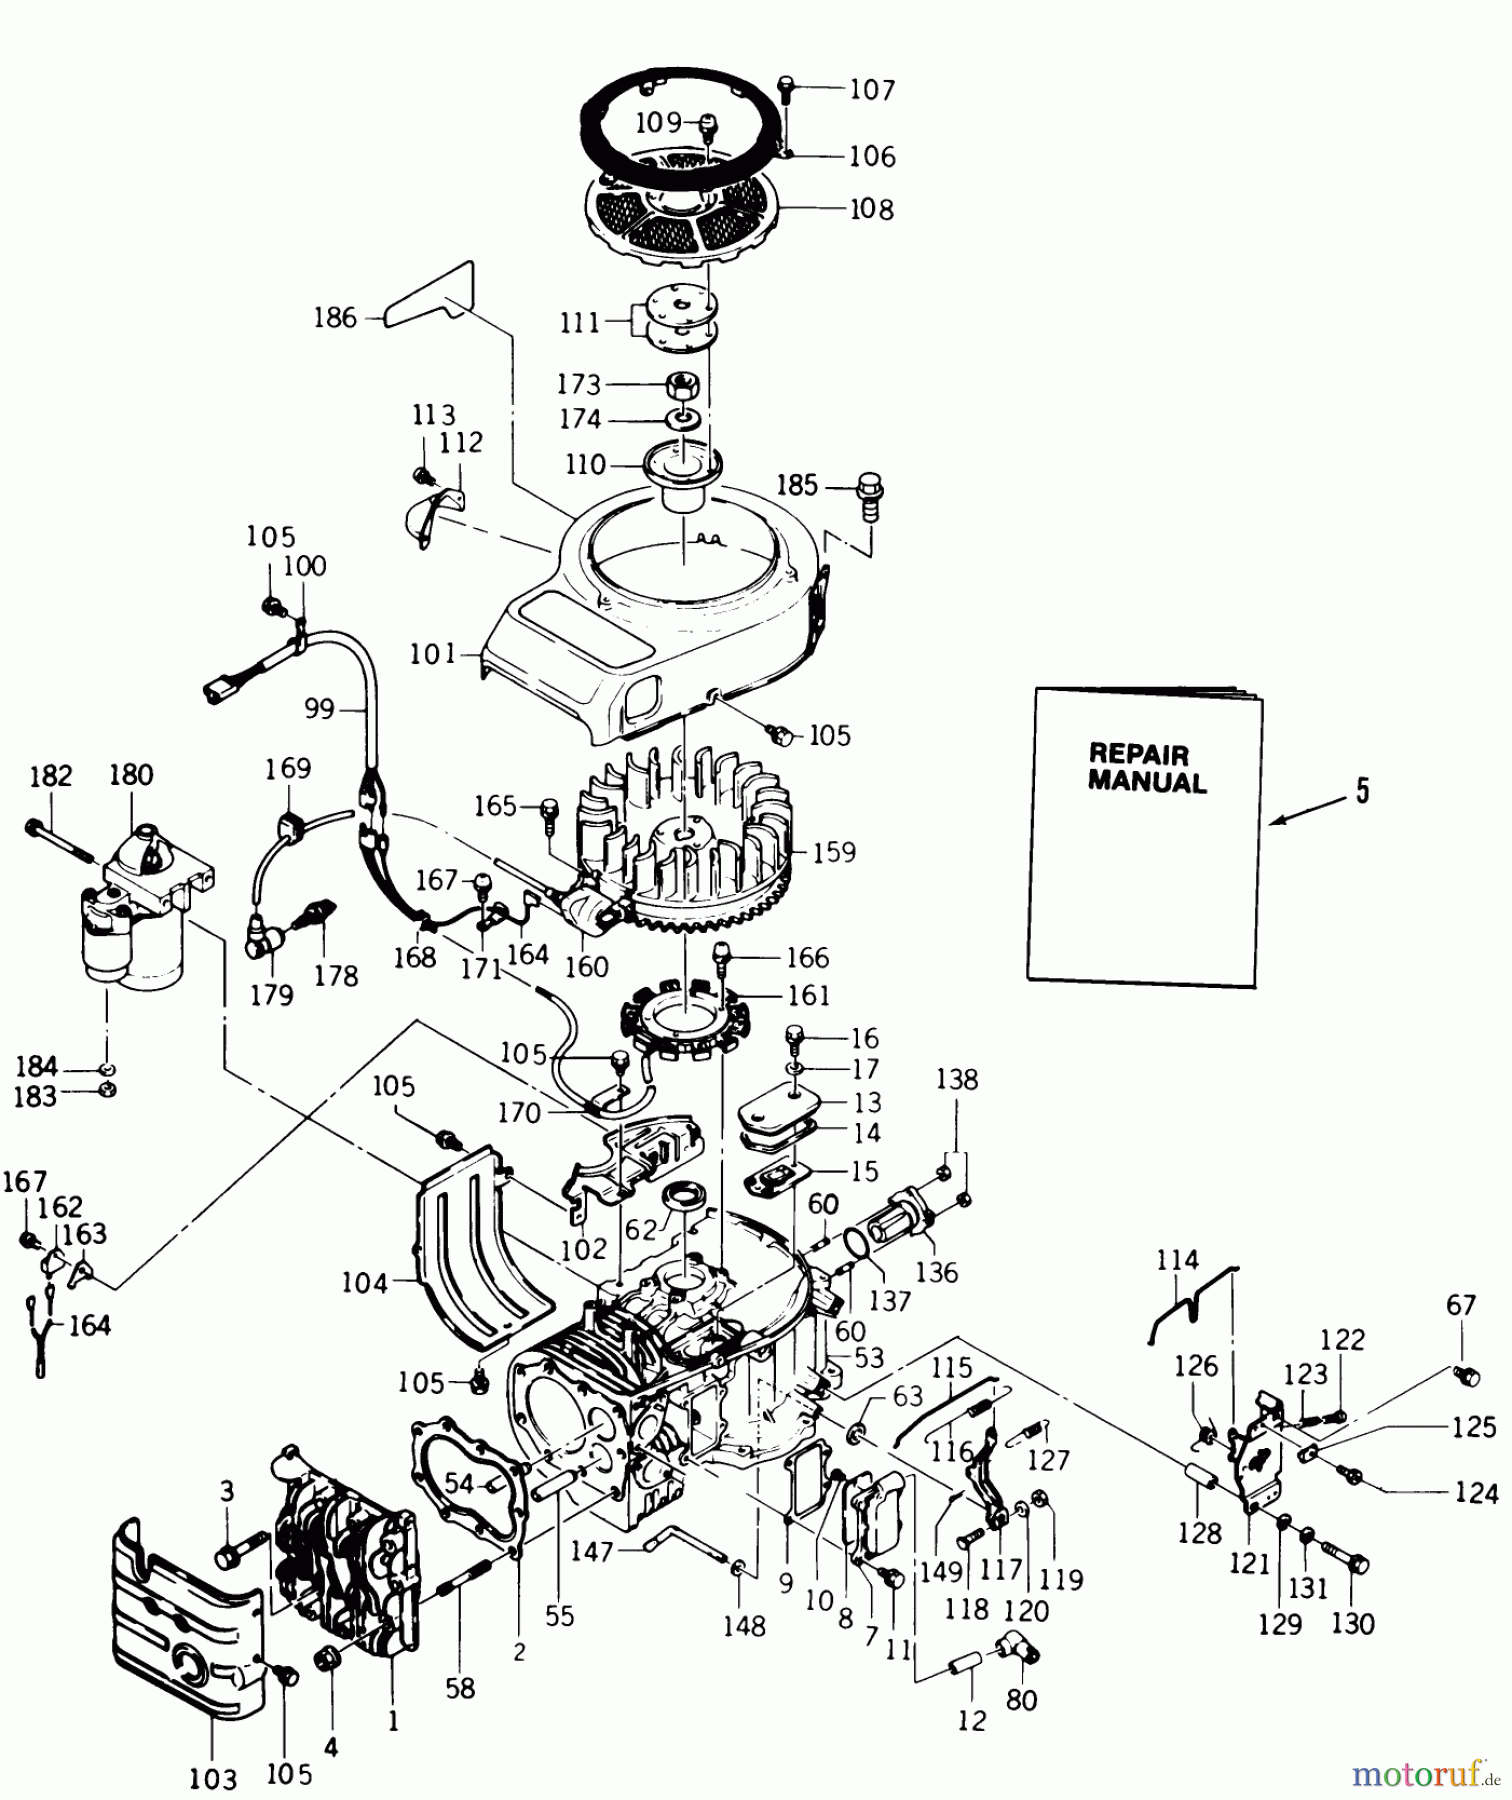  Toro Neu Mowers, Lawn & Garden Tractor Seite 1 22-17KE01 (257-H) - Toro 257-H Tractor, 1988 KAWASAKI FB460V TYPE AS-26 ENGINE #1